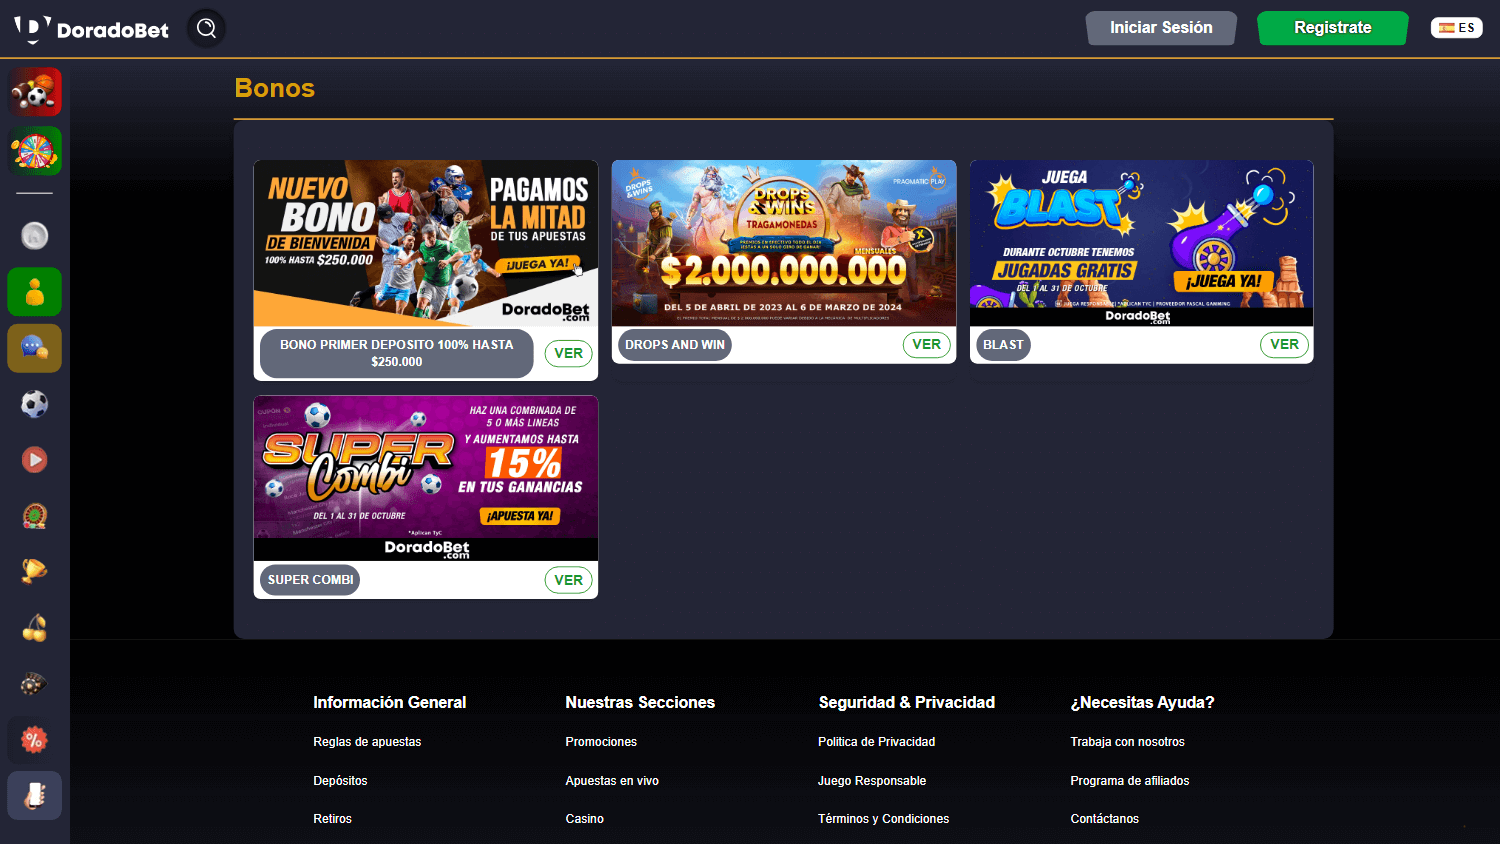 doradobet_casino_promotions_desktop